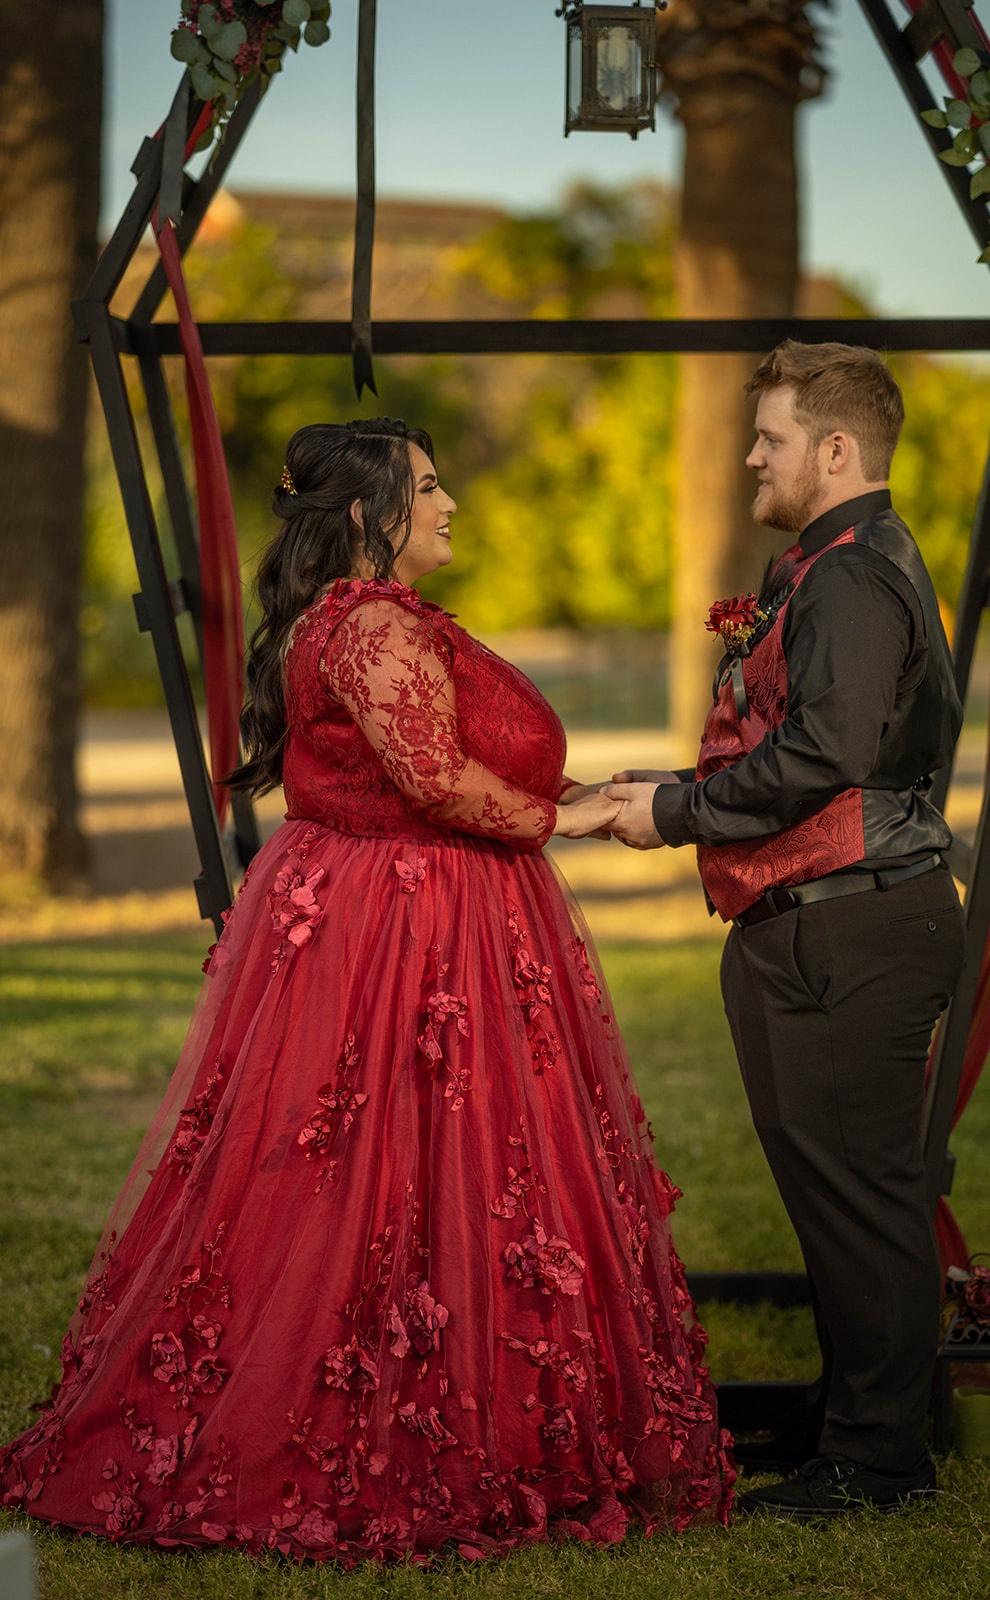 Capturing Love under a Lucky Unlucky Theme: A Friday the 13th Wedding at Sahuaro Ranch Park